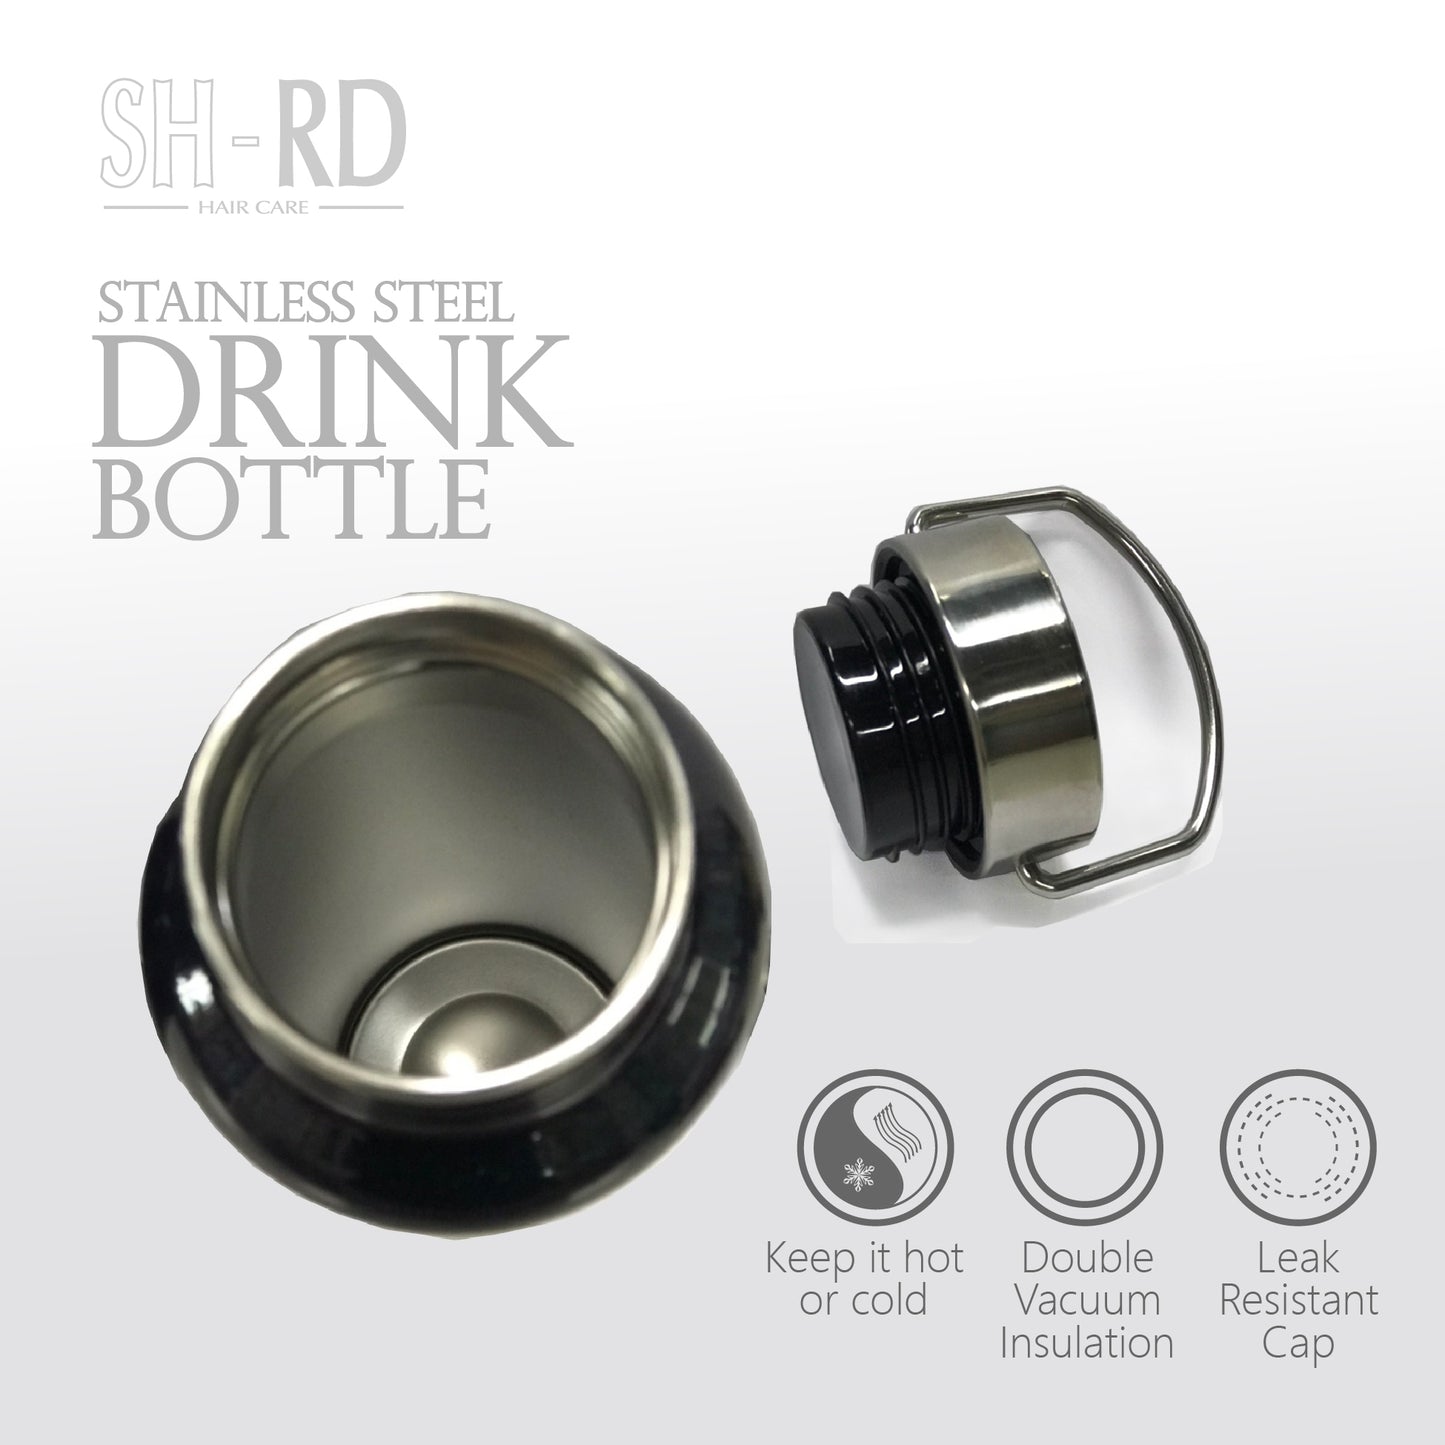 SH-RD Stainless Steel Drink Bottle